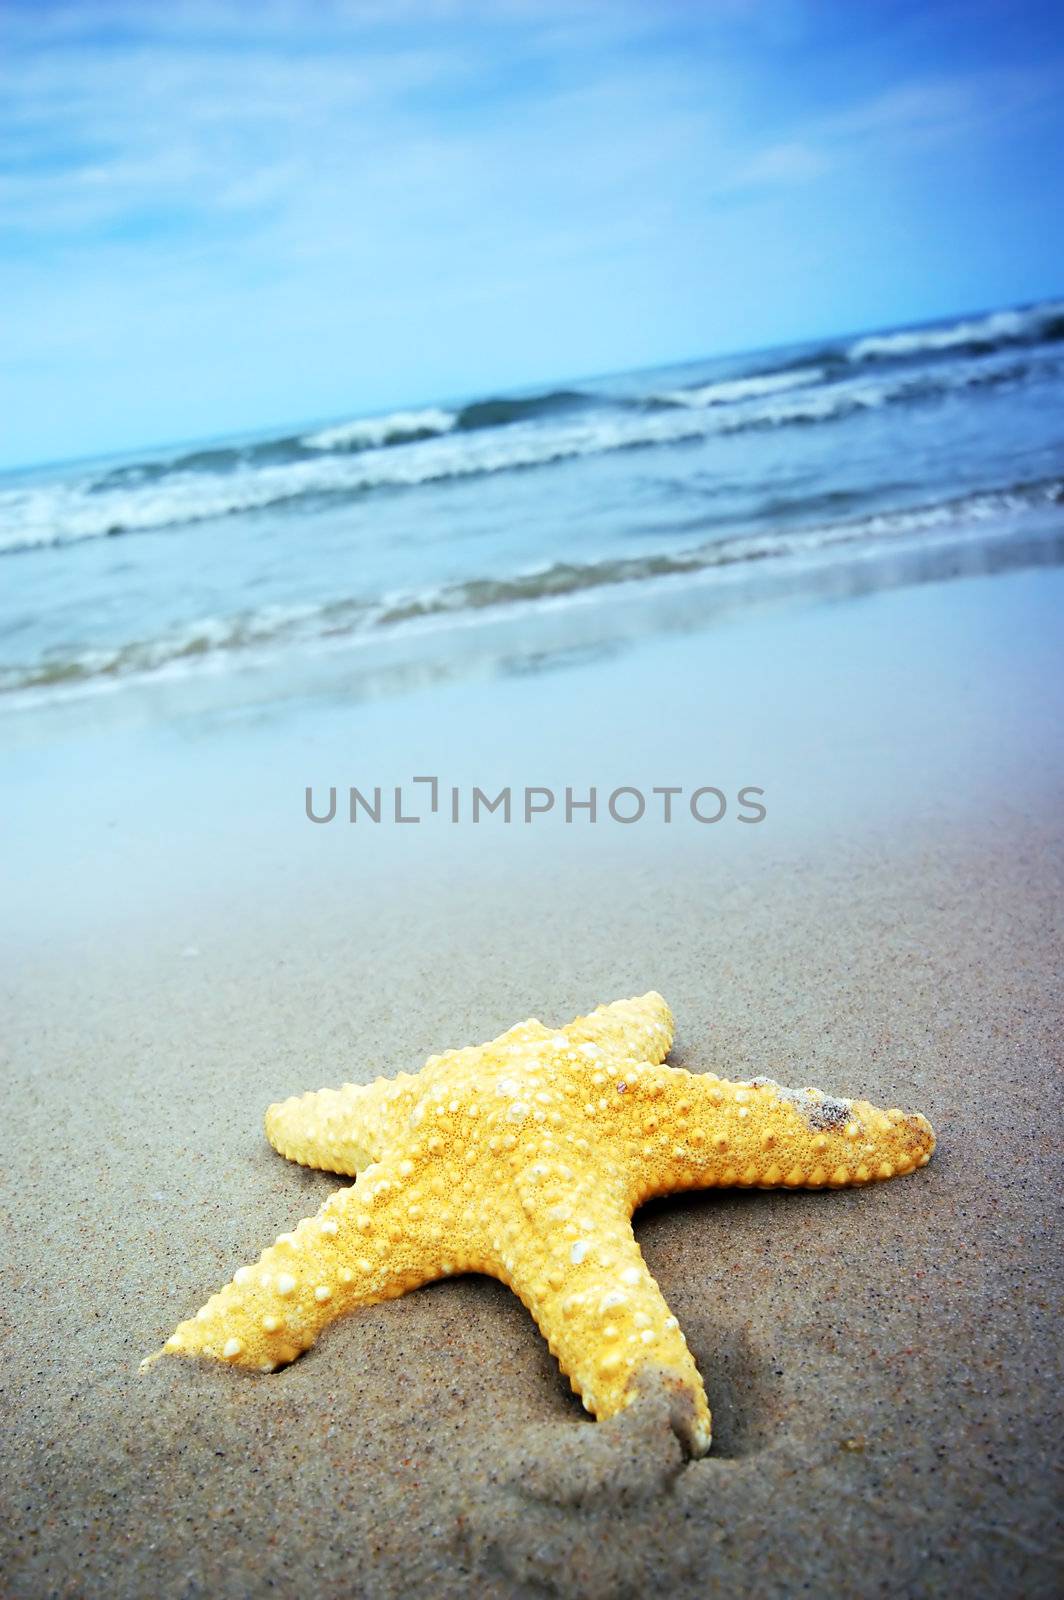 Starfish on the tropical beach